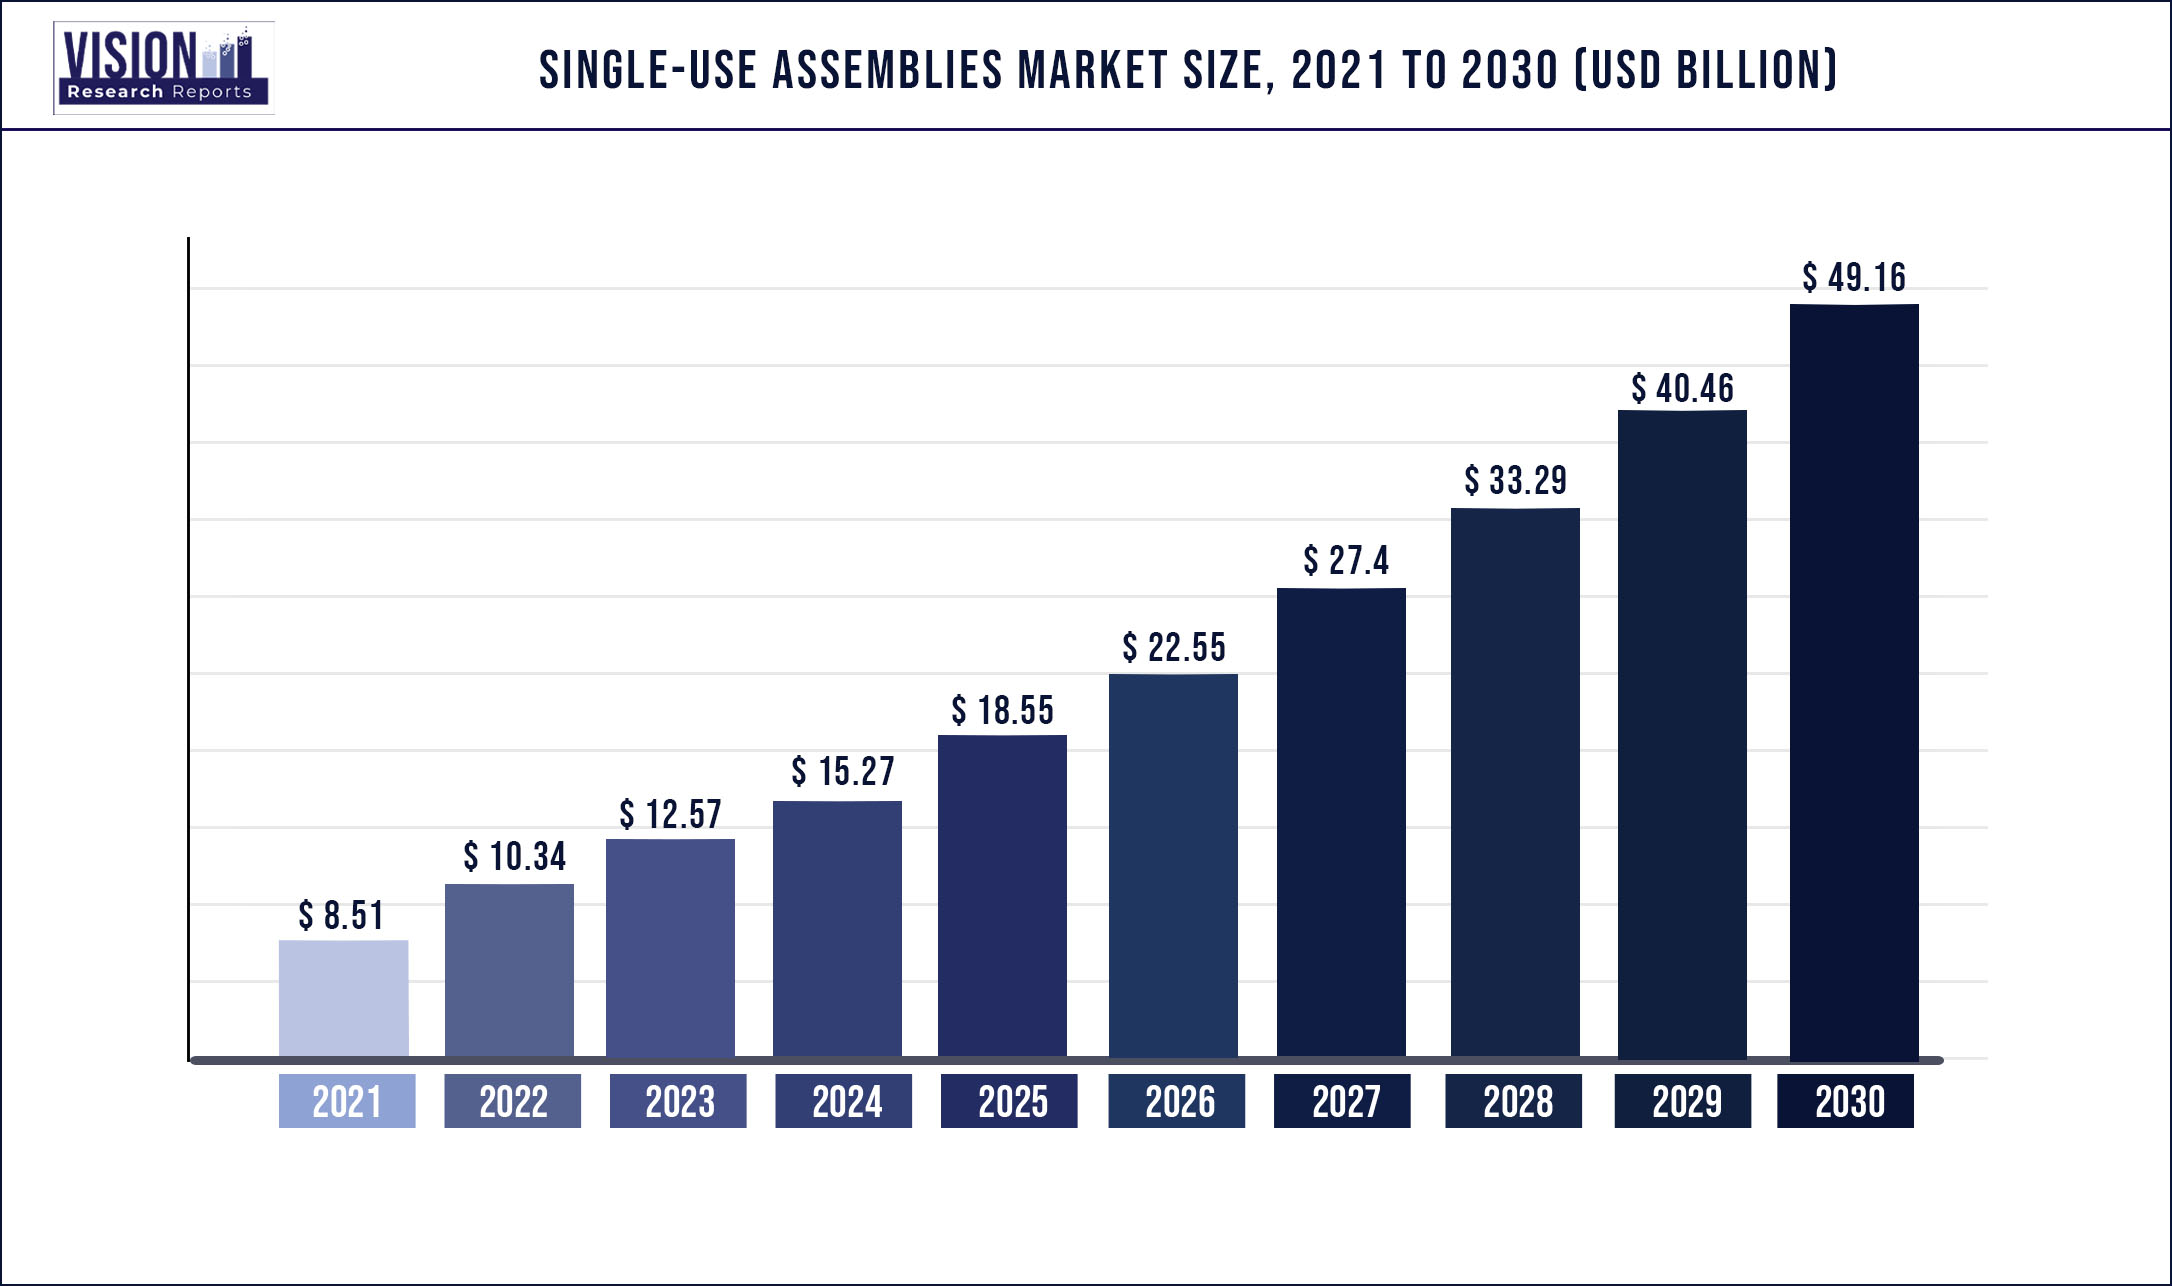 Single-use Assemblies Market Size 2021 to 2030